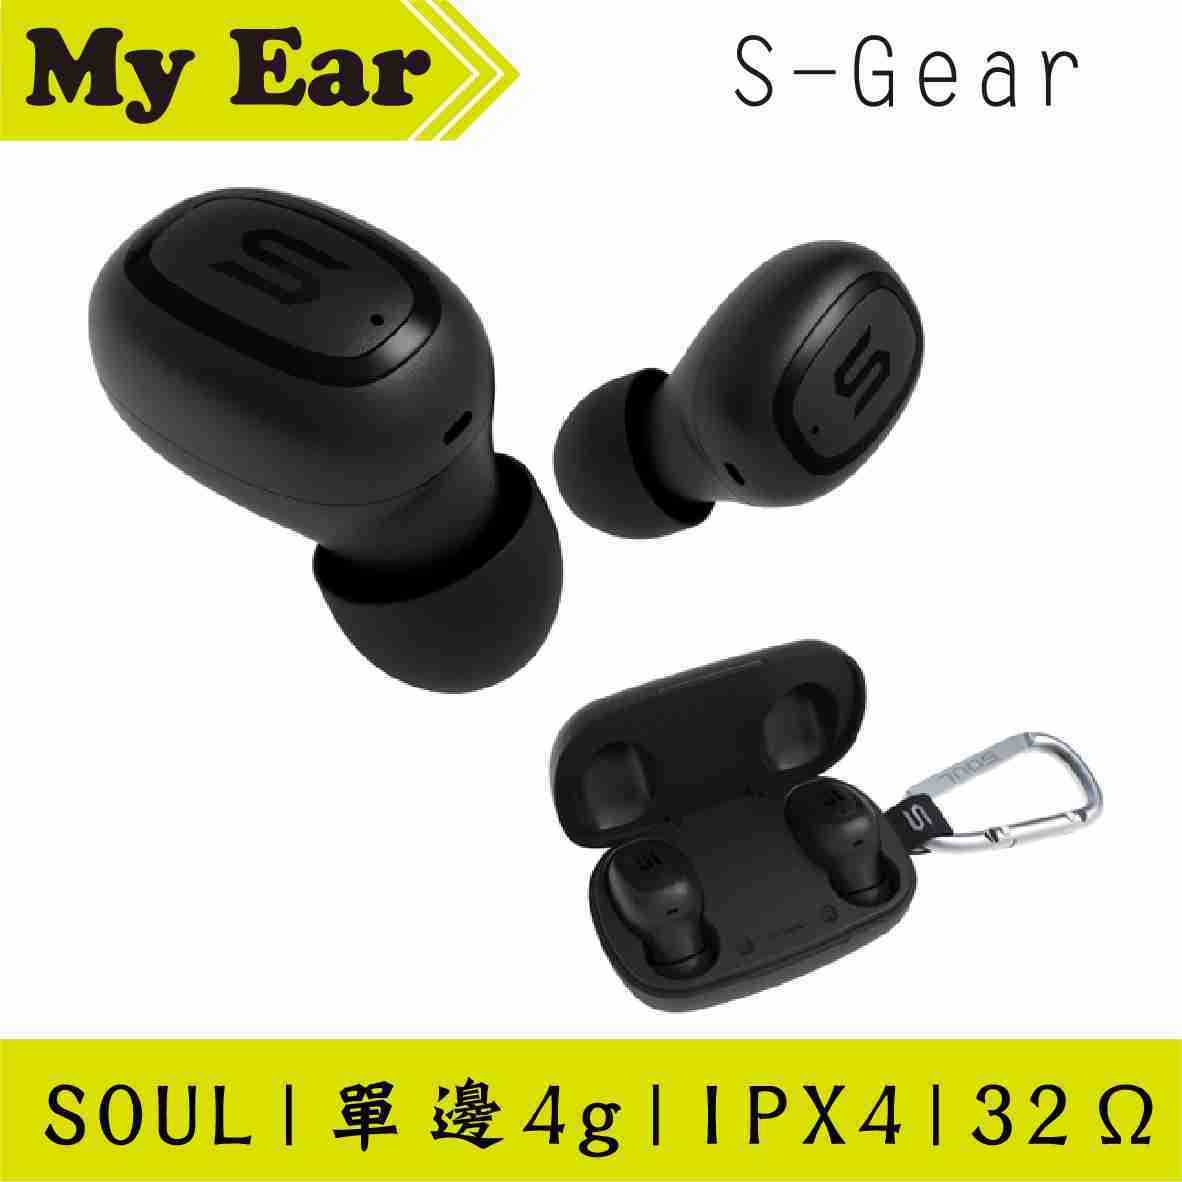 SOUL S-Gear 黑色單邊4g 附登山扣 防水 真無線 藍芽耳機 | My Ear 耳機專門店